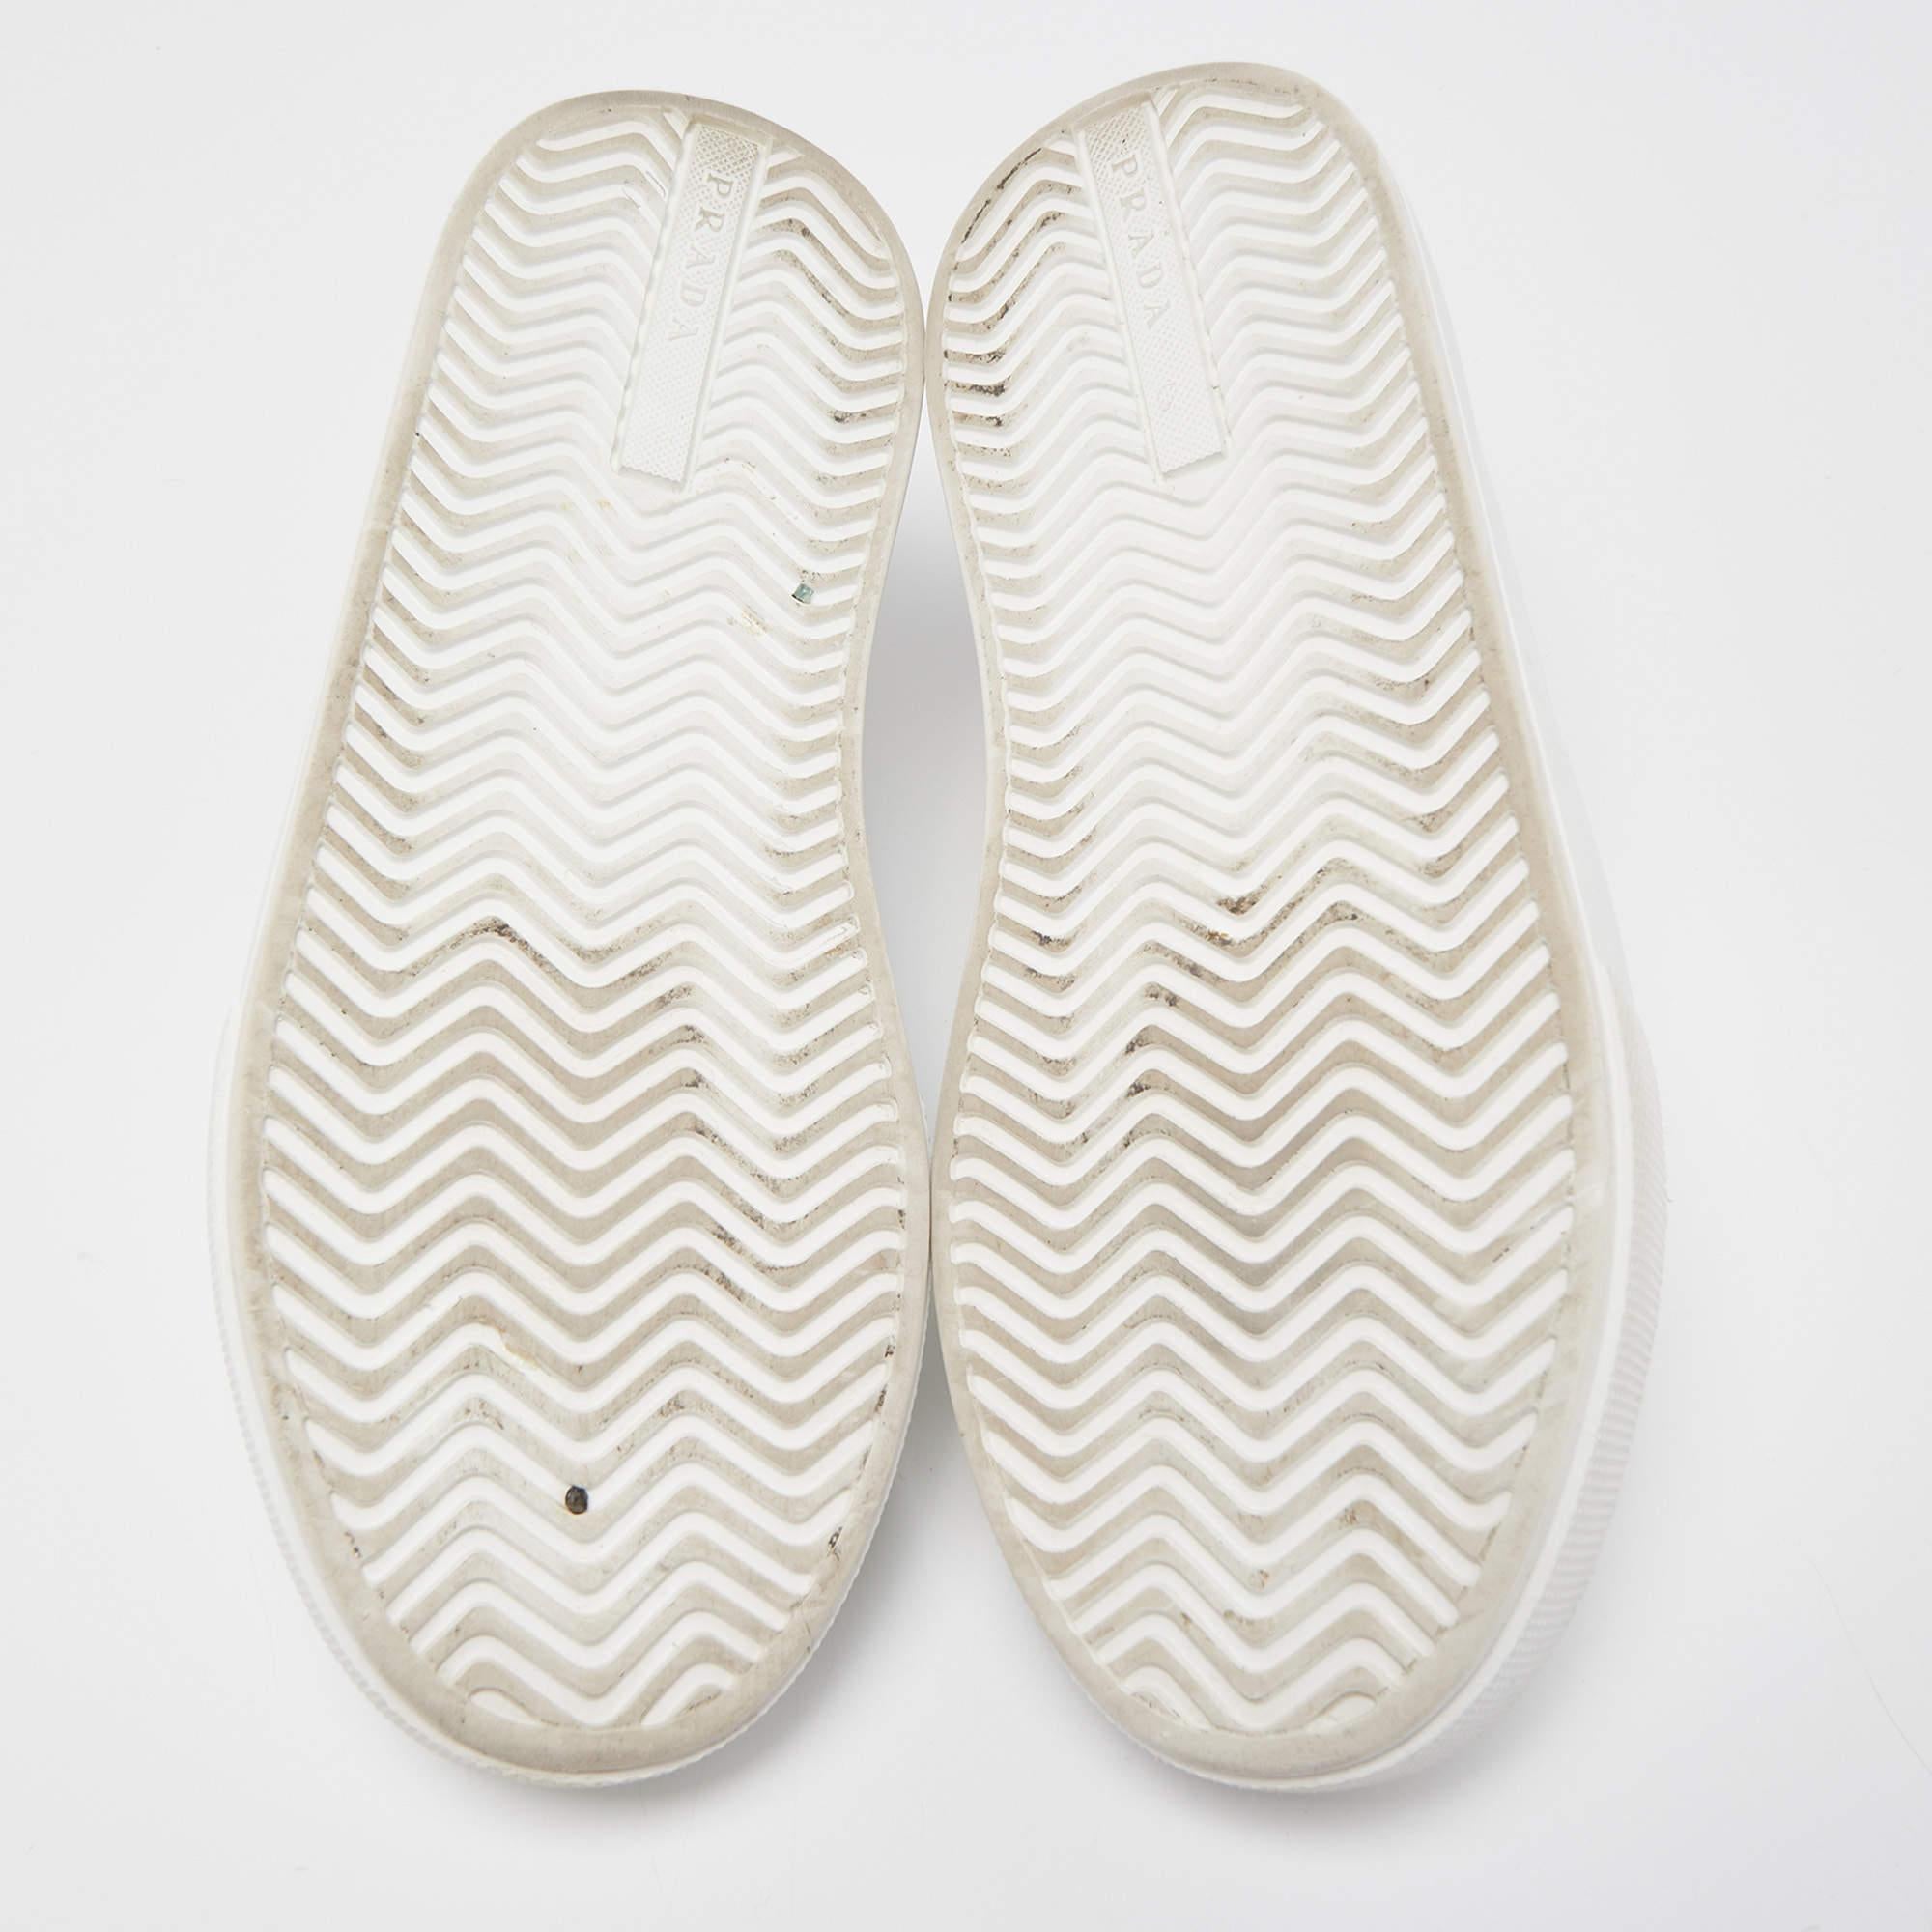 Prada White Leather Macro Low Top Sneakers Size 41 4